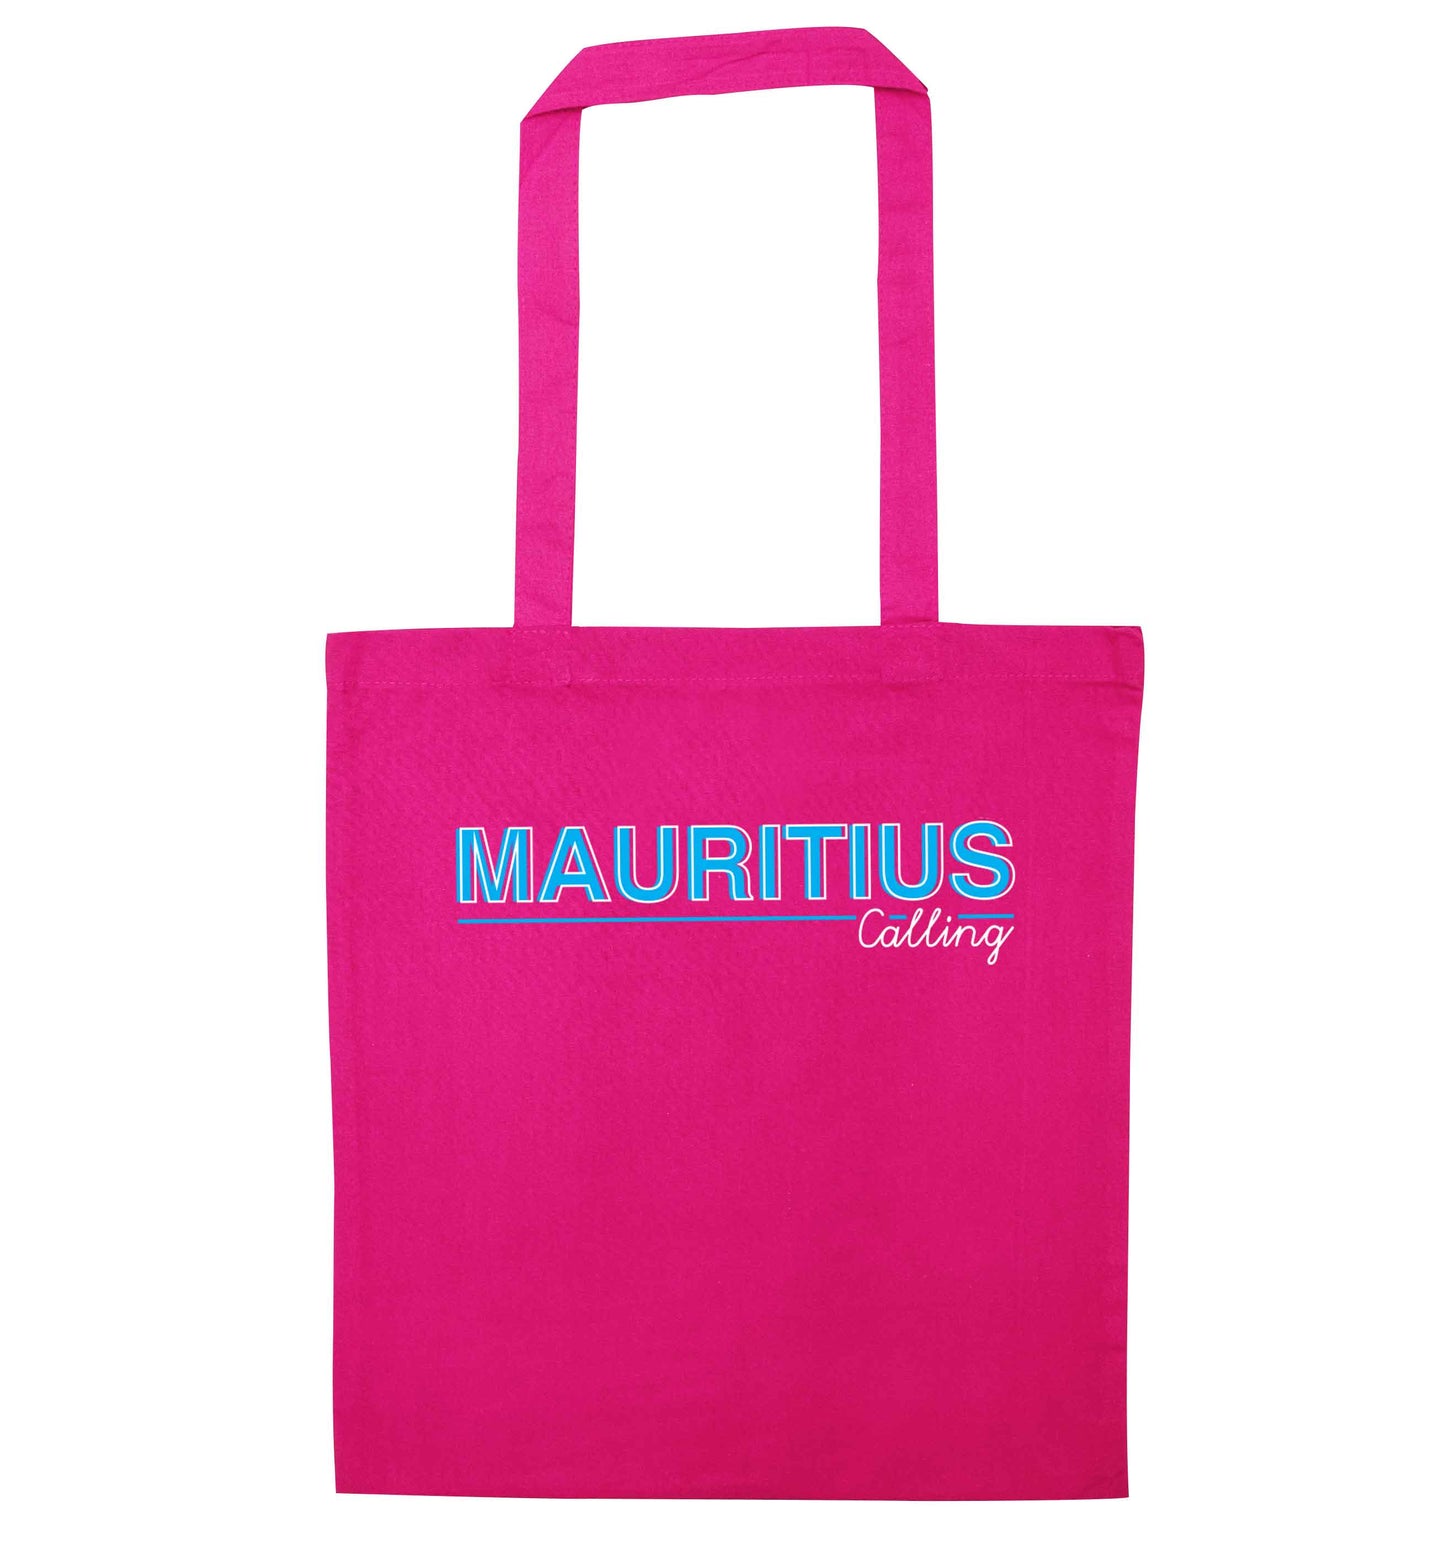 Mauritius calling pink tote bag